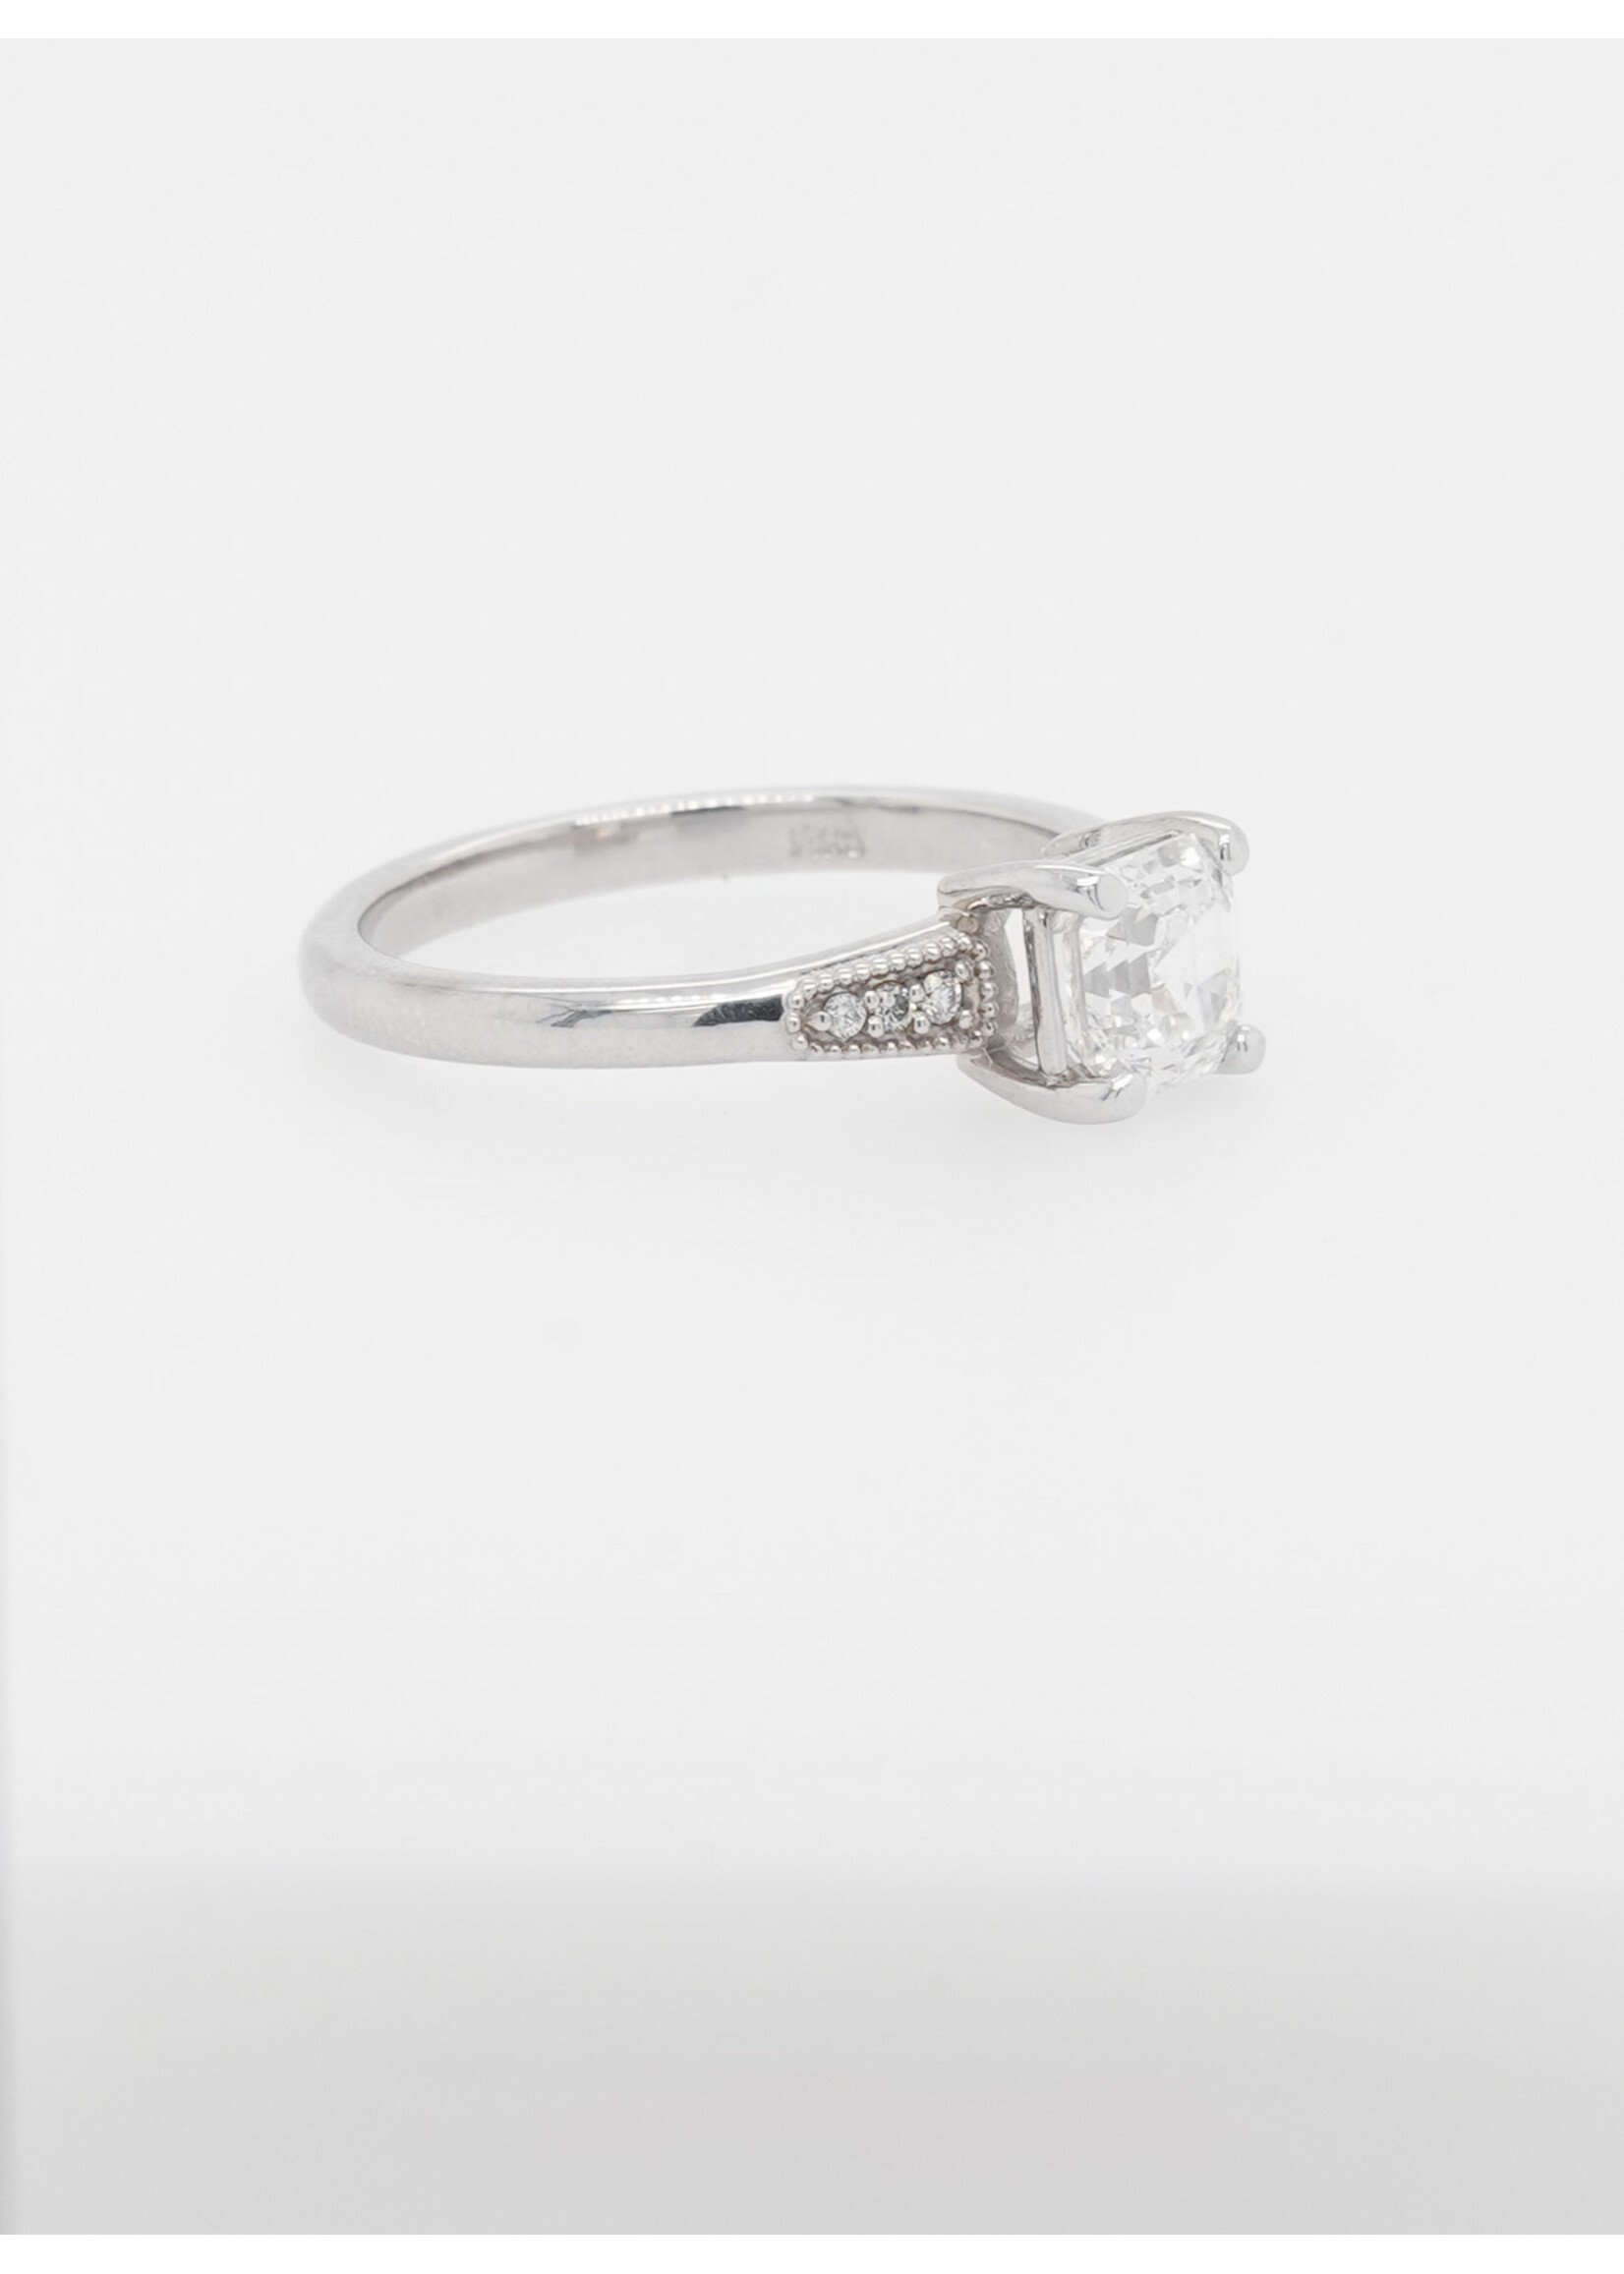 14KW 3.19g 1.20ctw (1.14ctr) F/VS1 GIA Asscher Cut Diamond Engagement Ring (size 6.34)